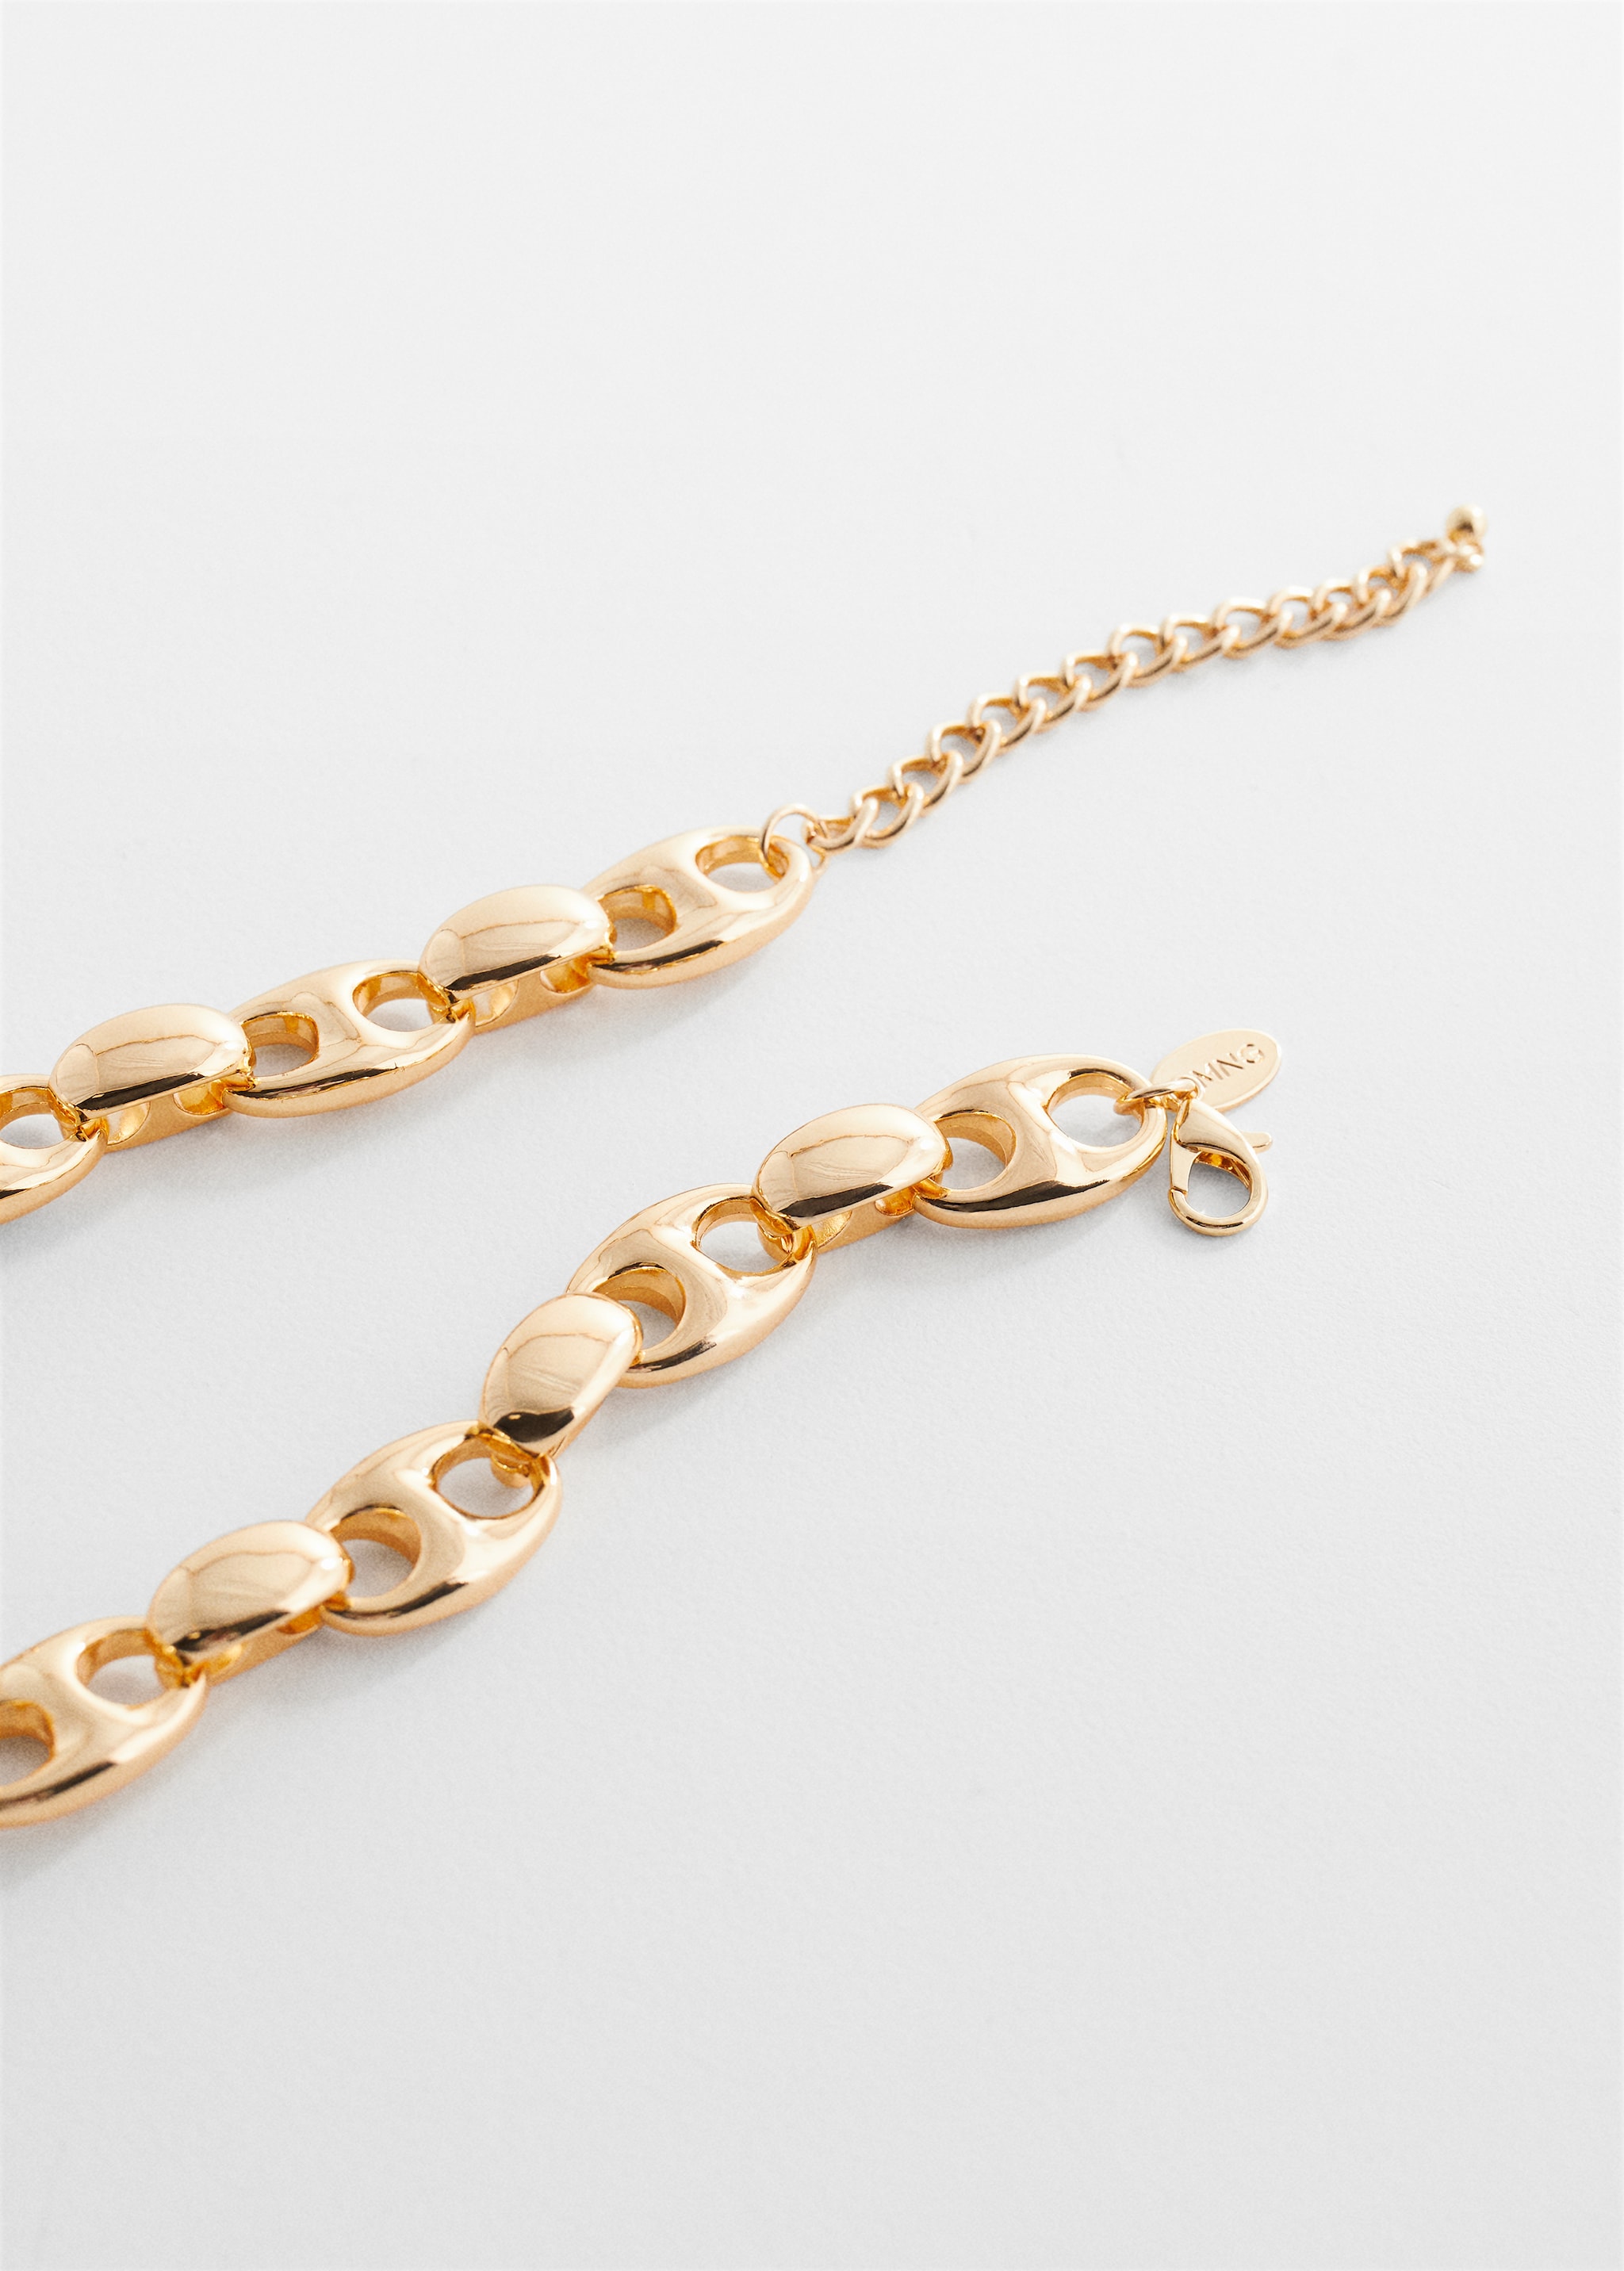 Link chain necklace - Medium plane